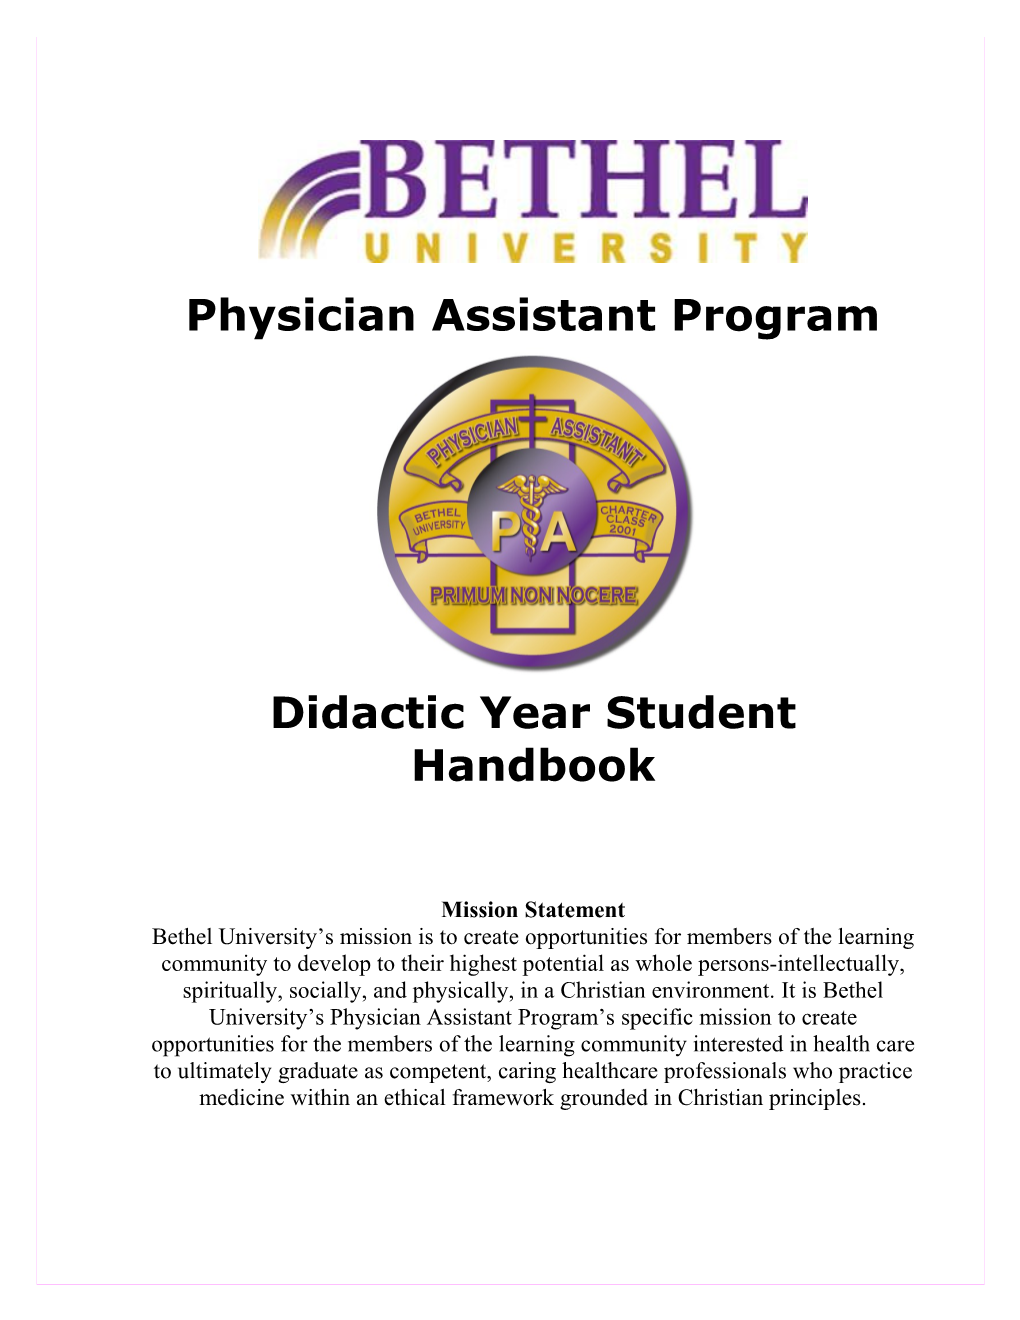 Didactic Year Student Handbook